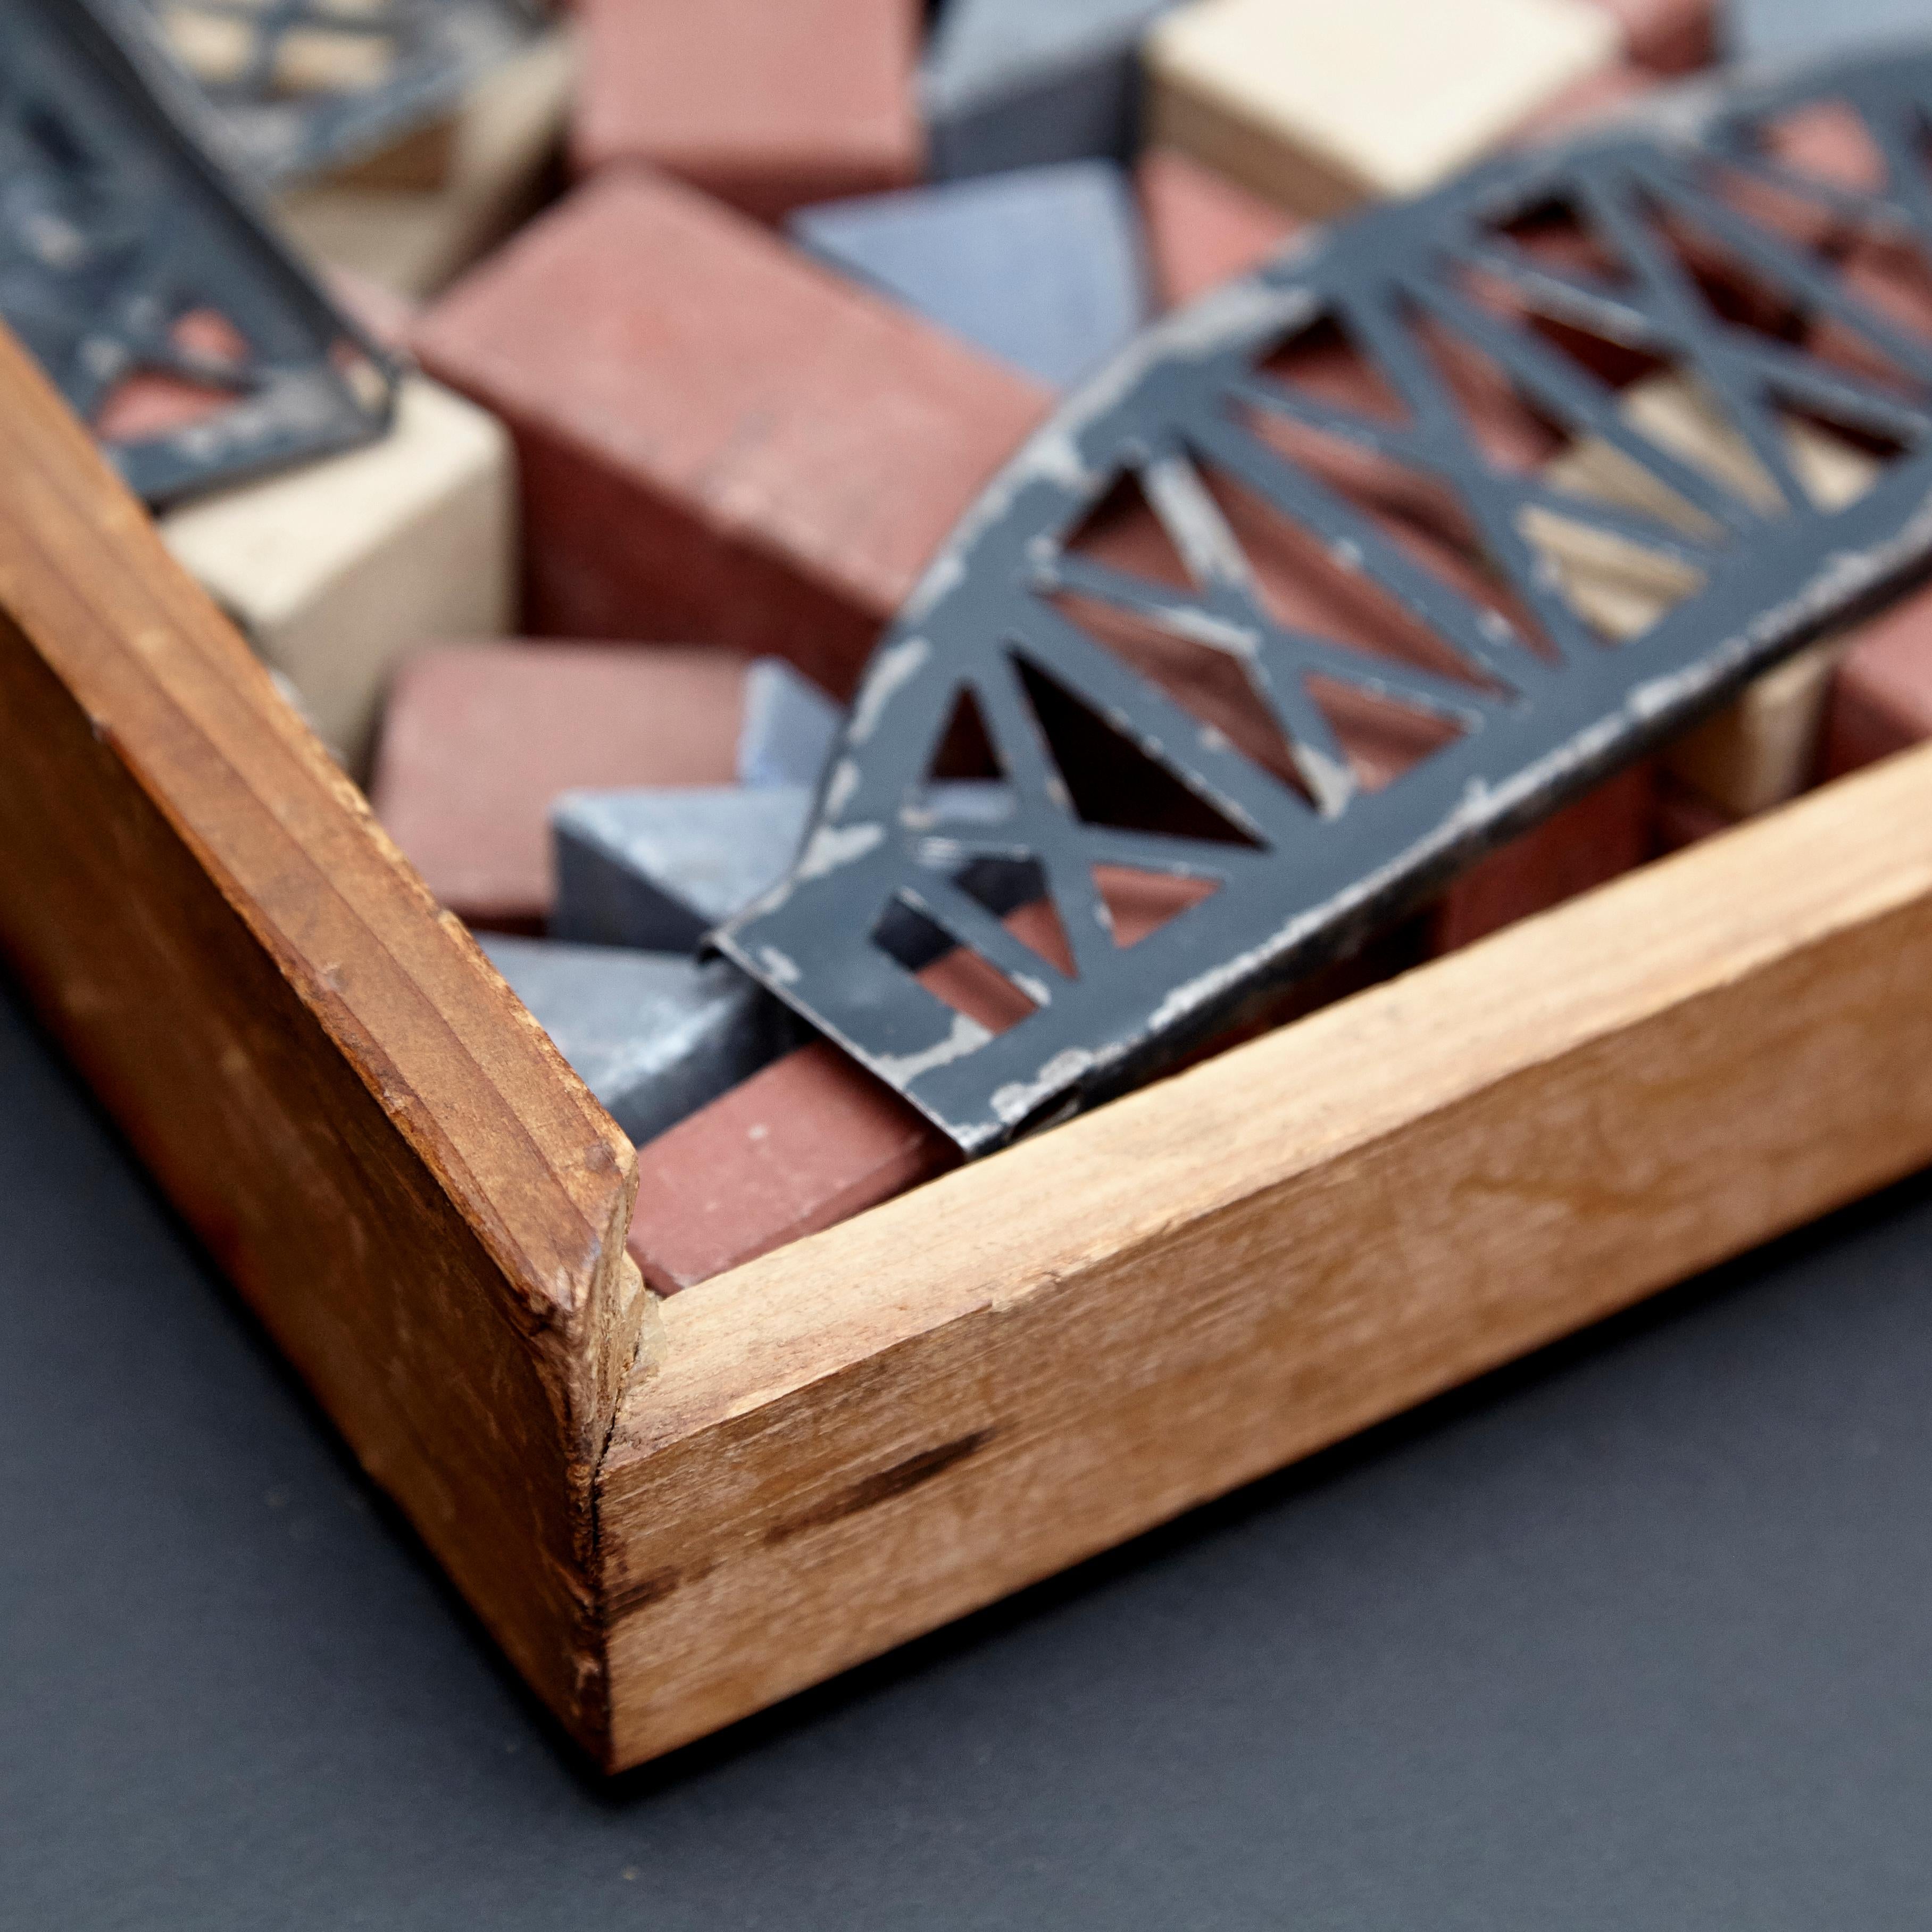 Richters German Anchor Stone Blocks Building Toy 2